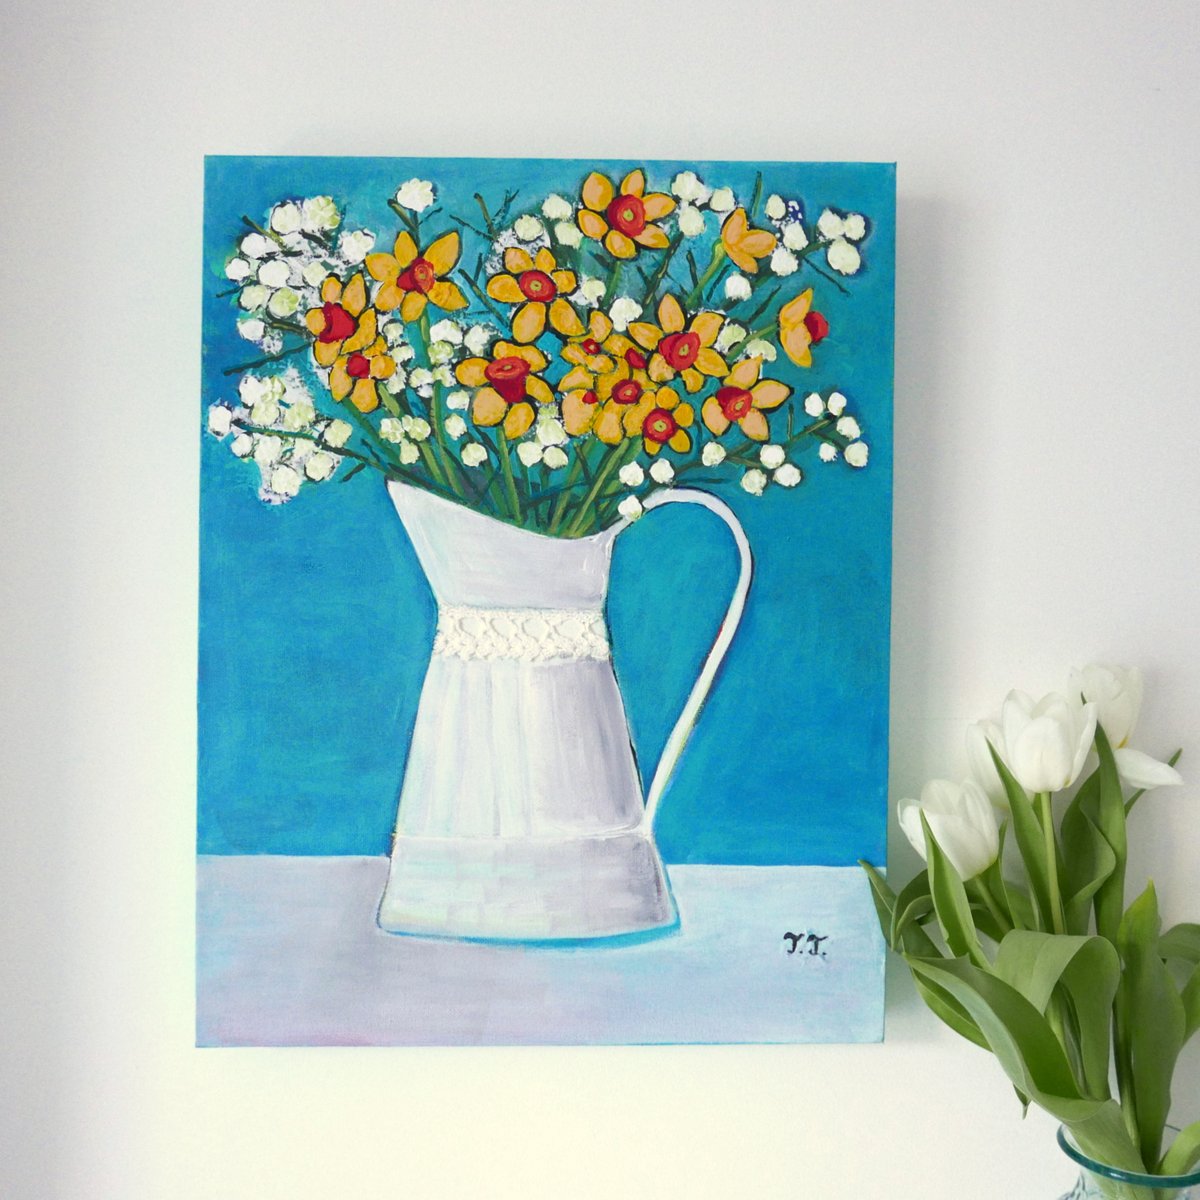 Spring Flowers in a Vintage Vase artgallery.co.uk/listing/0sw97n… 

#springflowers #vintagevase #stilllife #daffodil #daffodils #originalart #homedecor #interiordesigner #artlover #artcollector